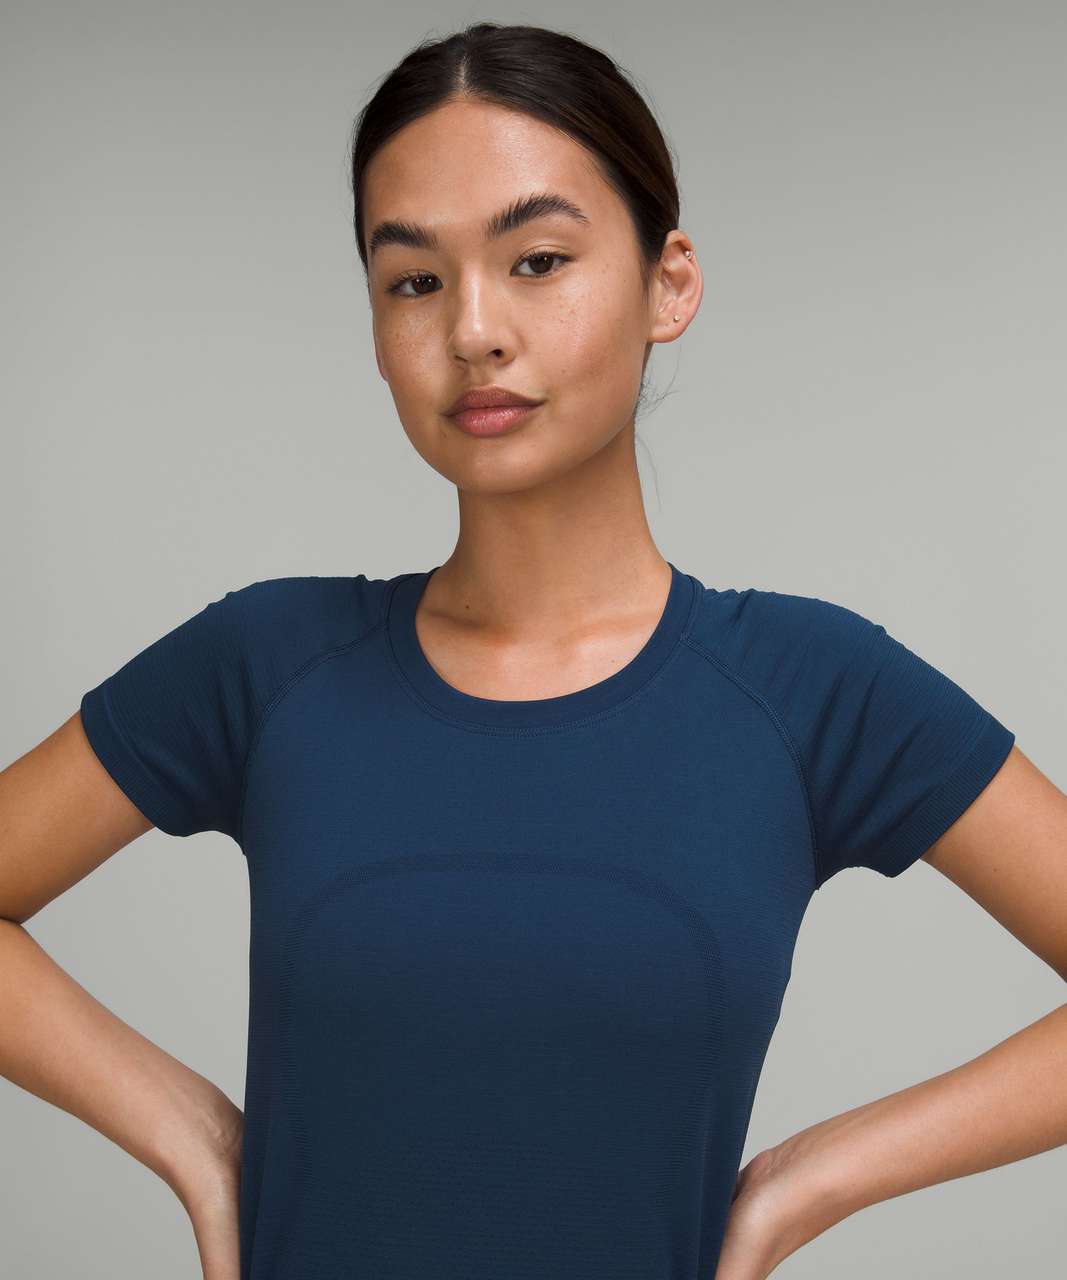 Lululemon Swiftly Tech Short Sleeve Shirt 2.0 - Mineral Blue / Mineral Blue